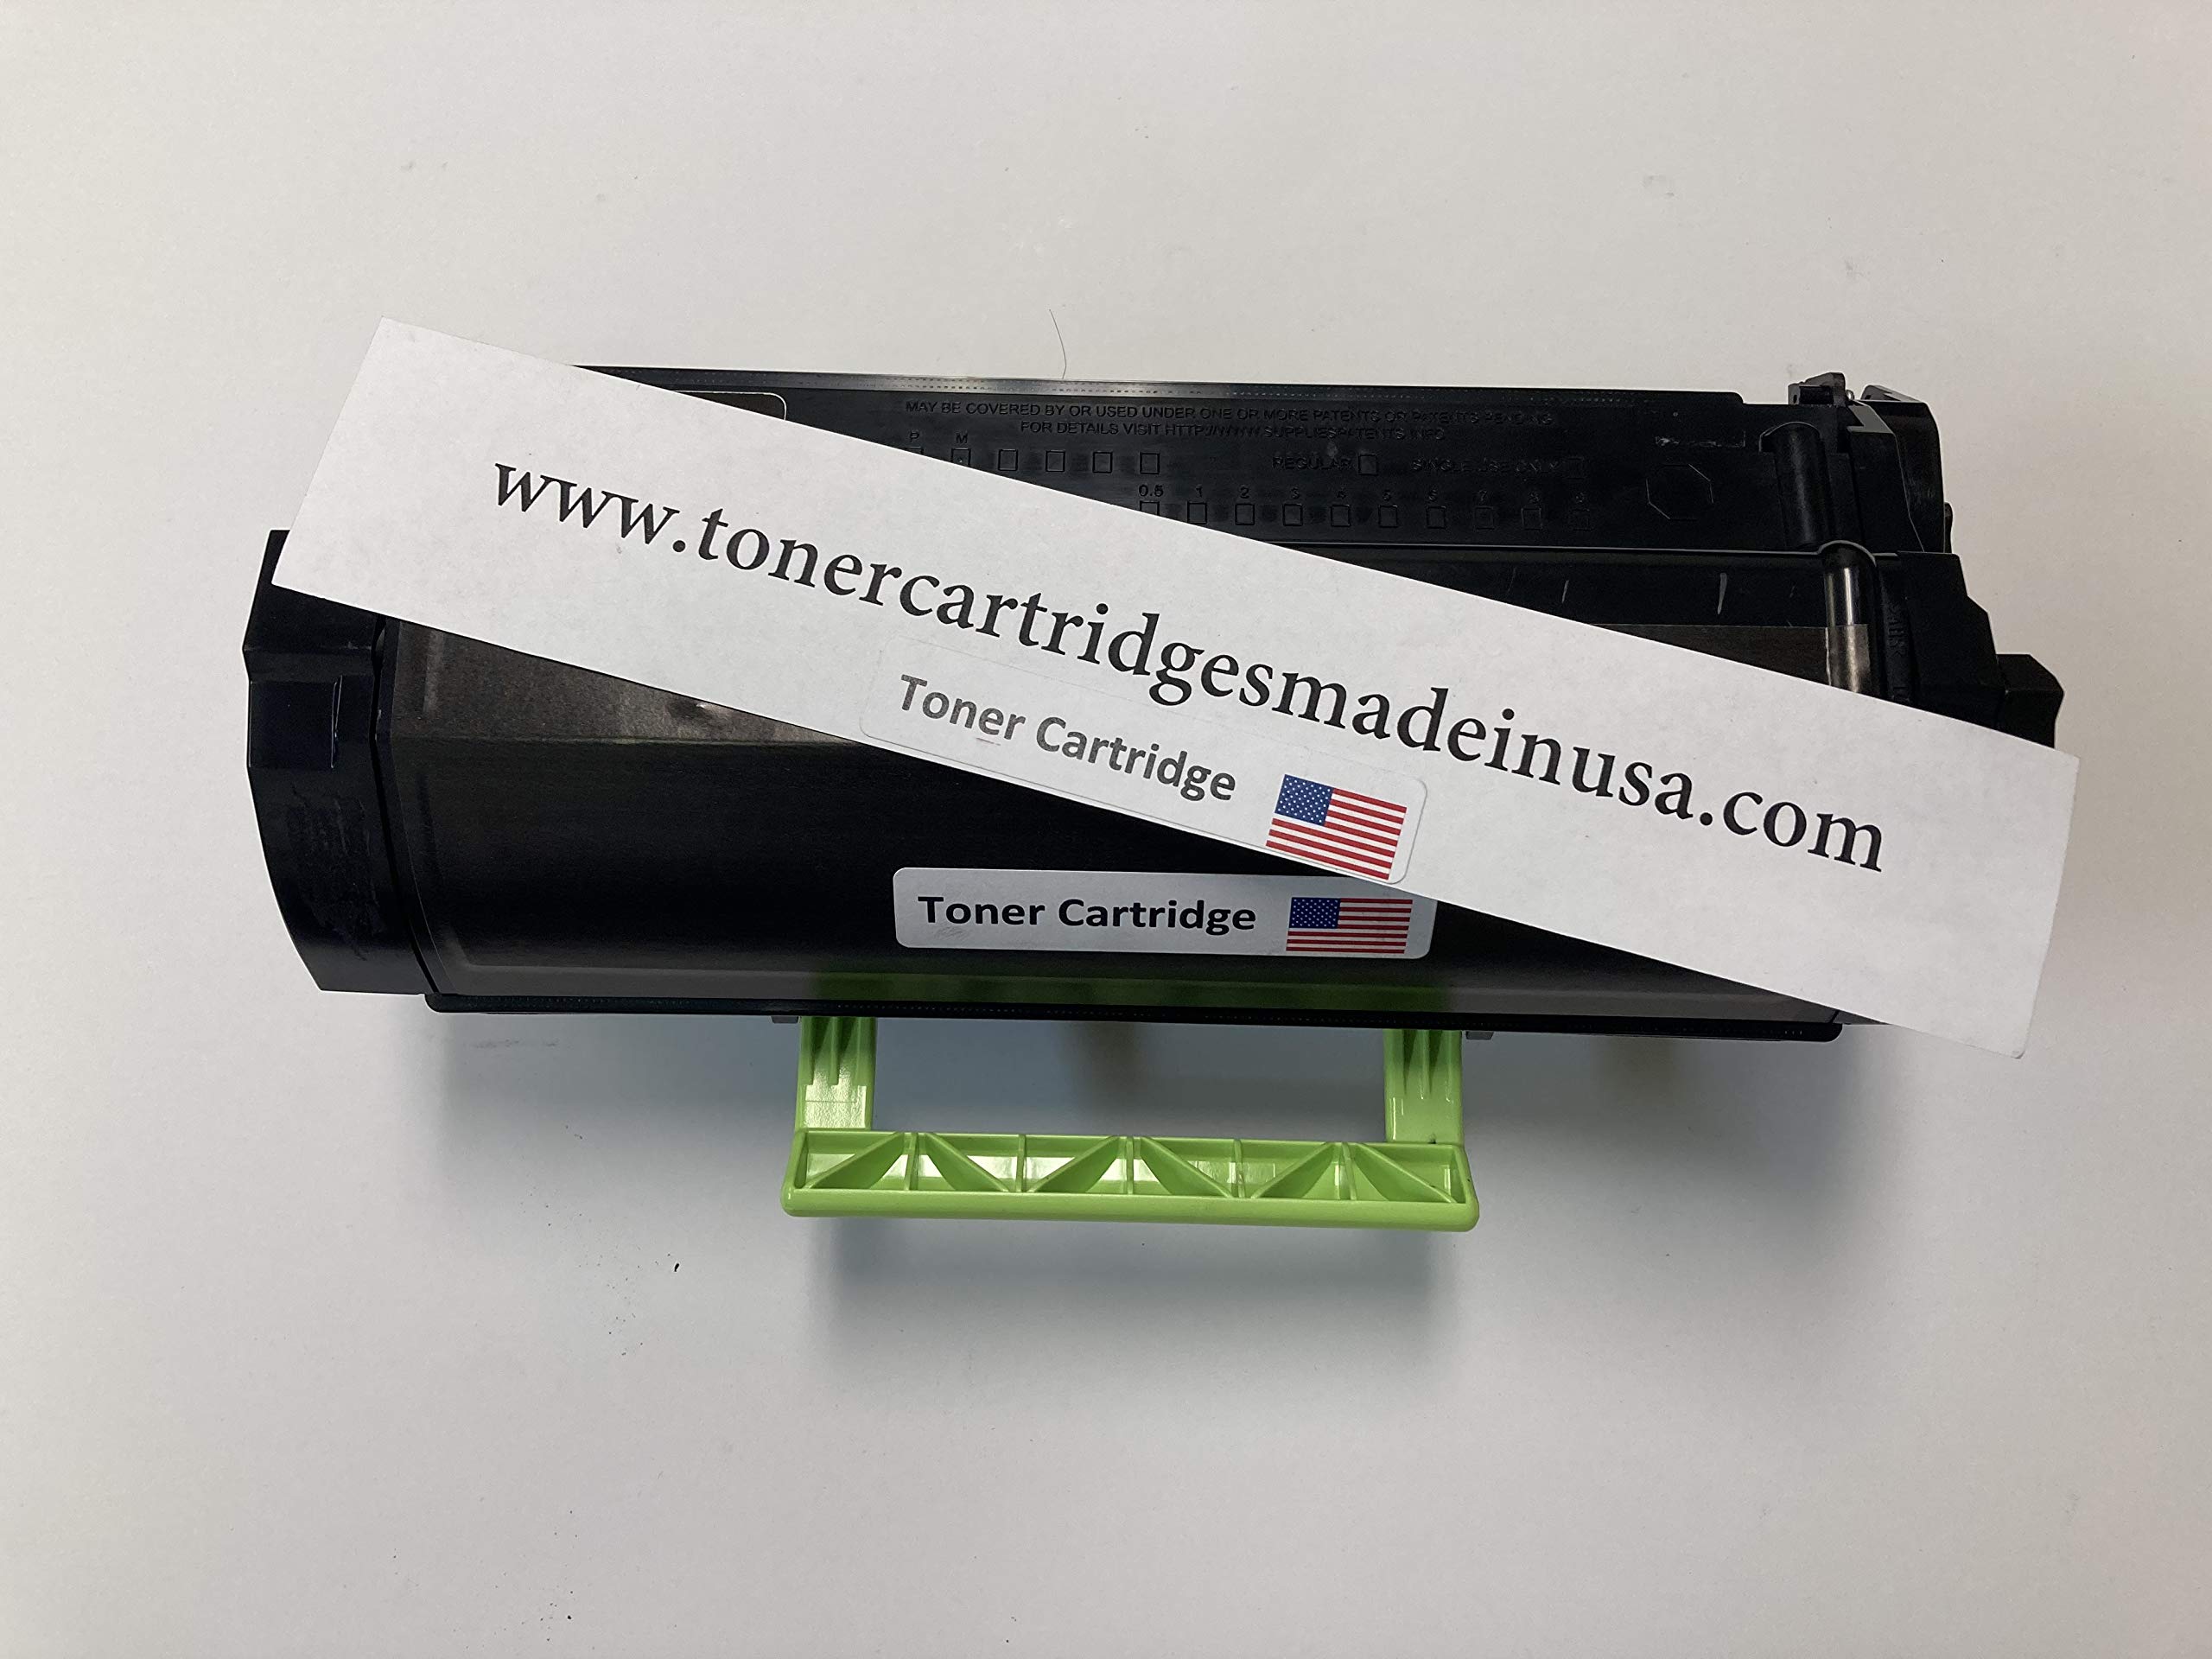 Konica Minolta Bizhub 4700 USA Made OEM-Alternative Black Toner Cartridge, Yields up to 20,000 Pages. A63t01w (Tnp-37). Made in USA.